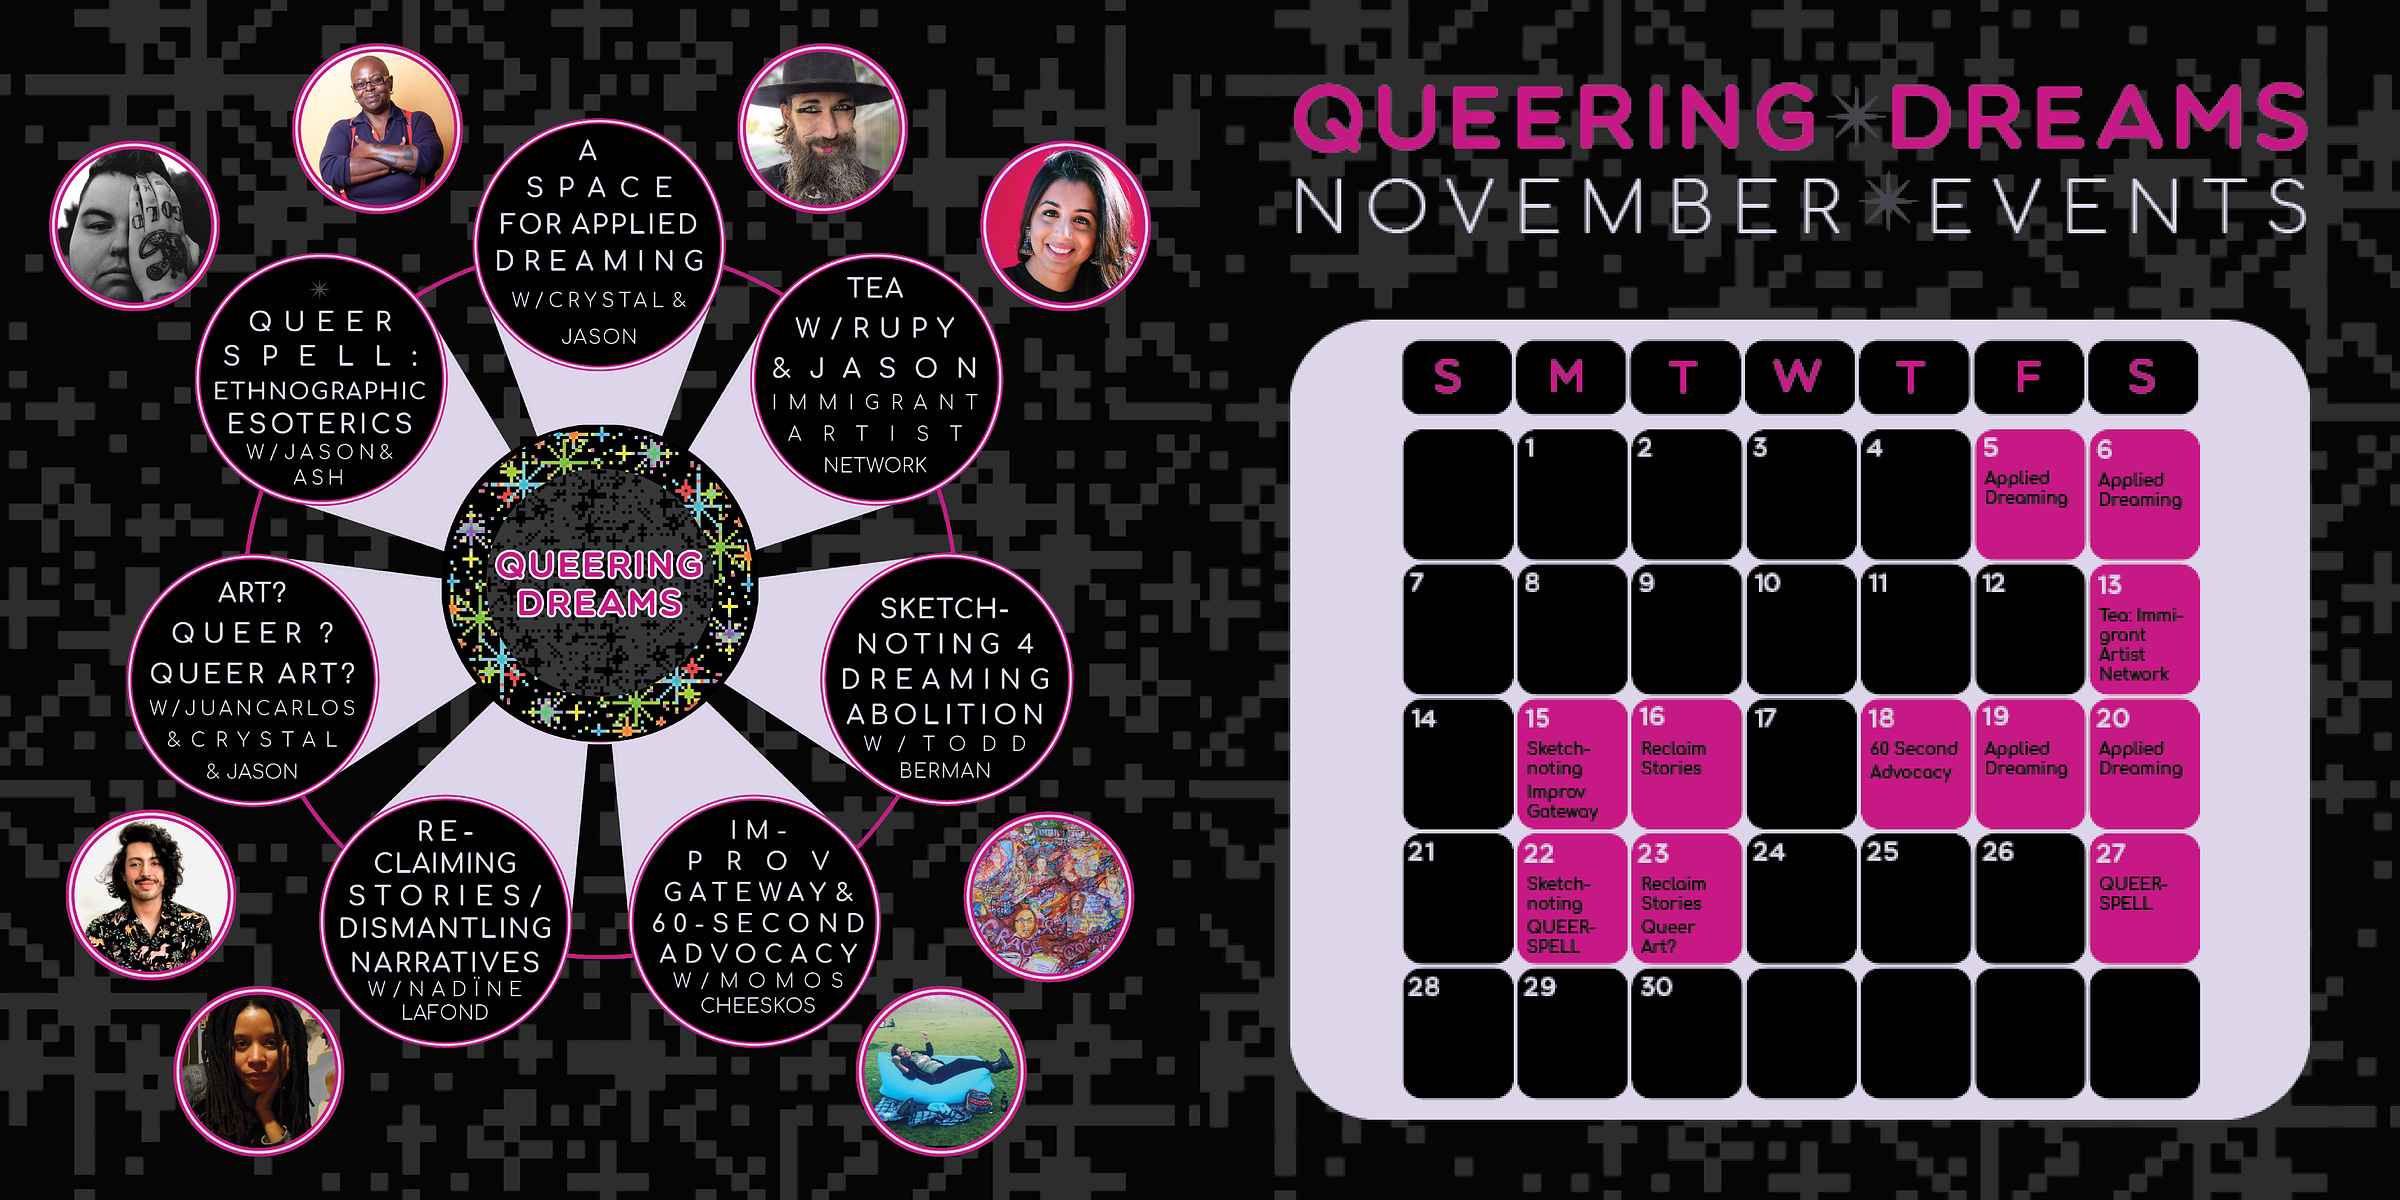 A digital flyer for the Queering Dreams November 2021 Events. It includes headshots of Crystal Mason, Jason Wyman, Rupy C. Tut, Todd Berman, Momos Cheeskos, Nadïne LaFond, Juan Carlos Escobedo, and Ash Tré Phillips.